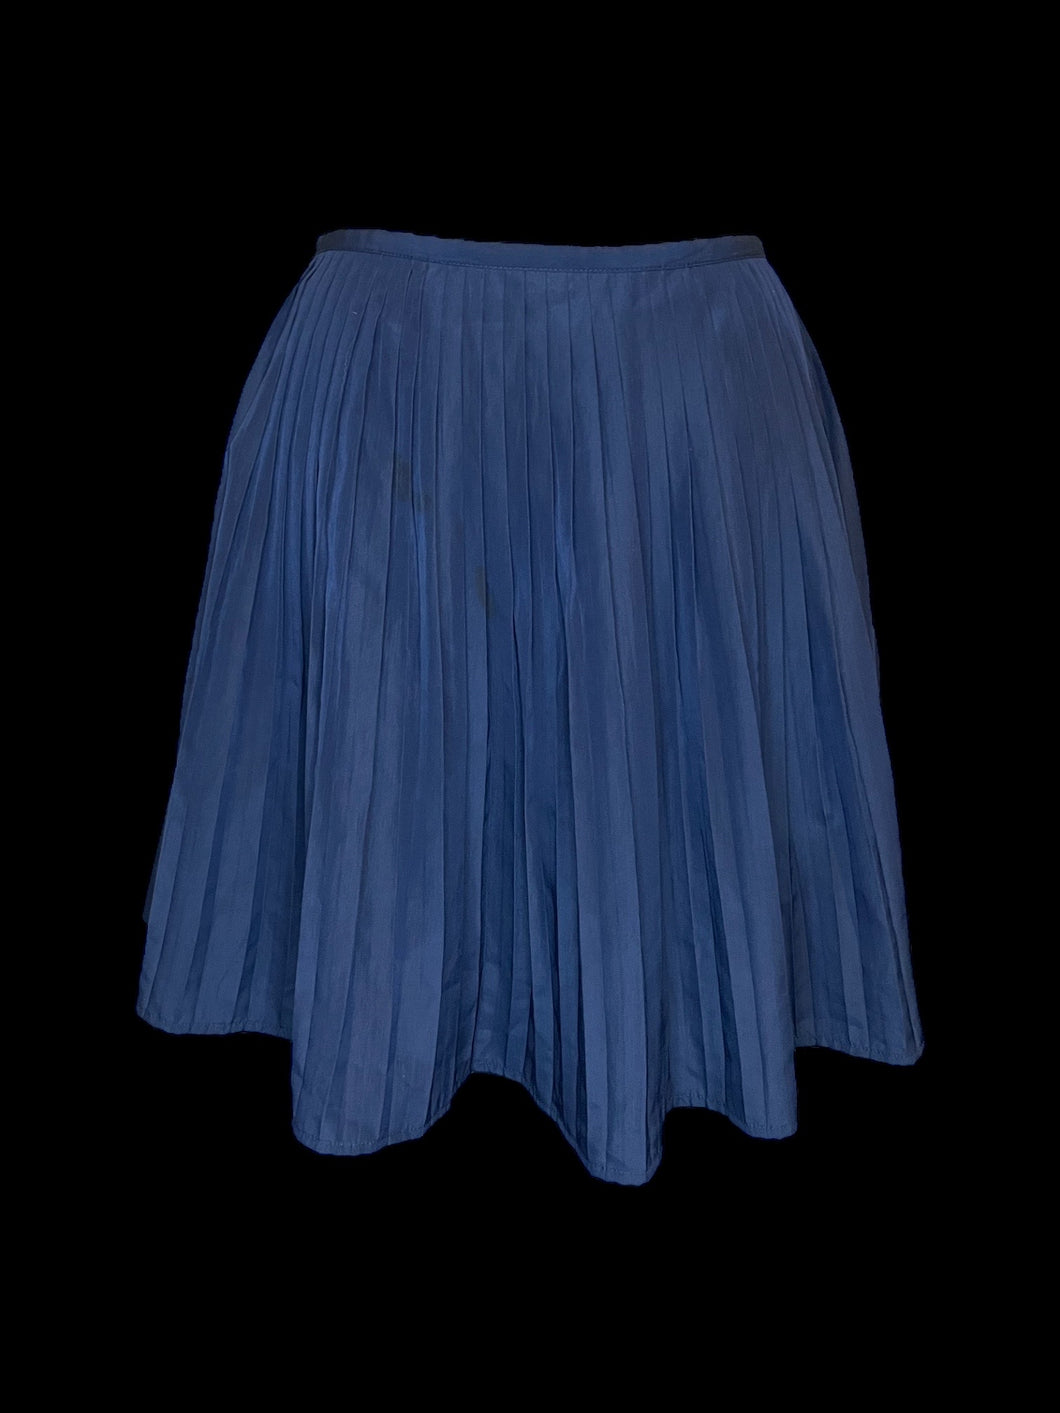 M Dark blue pleated skirt w/ zipper/clasp closure